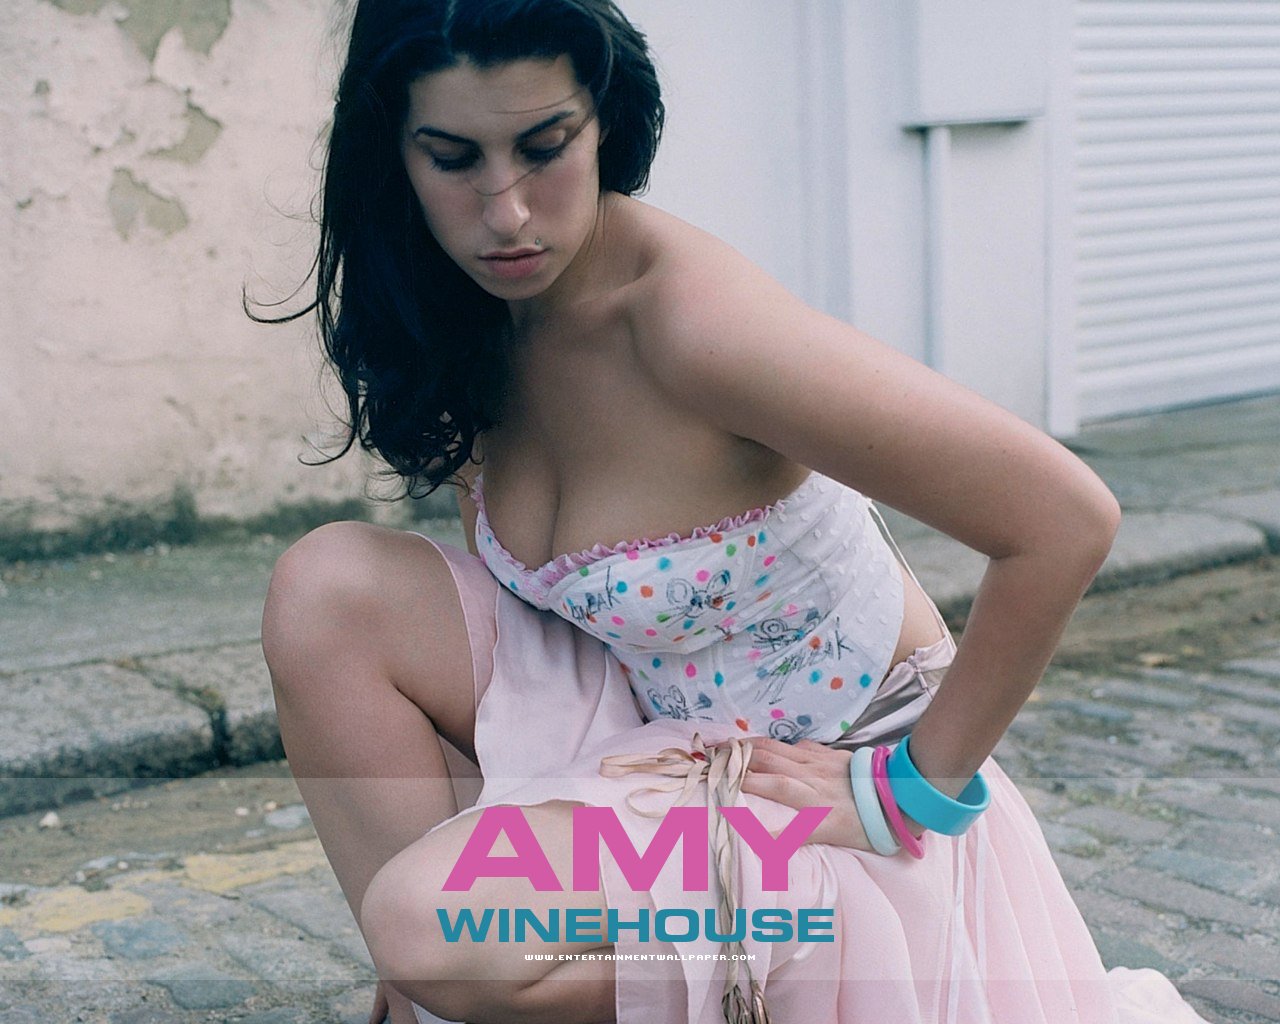 Fond d'ecran Amy Winehouse album